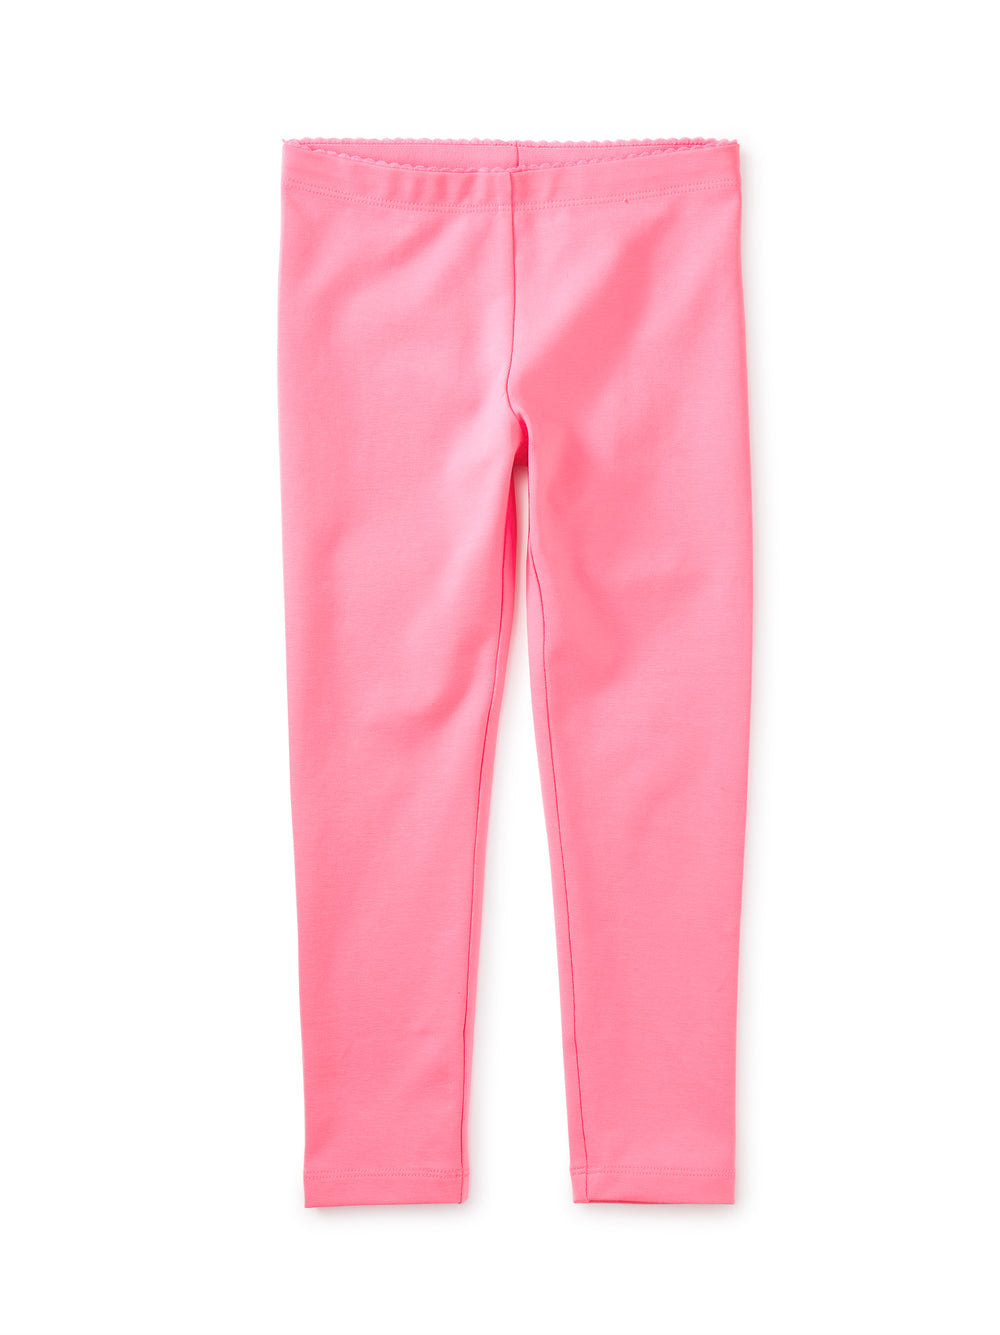 Sachet Pink Solid Leggings